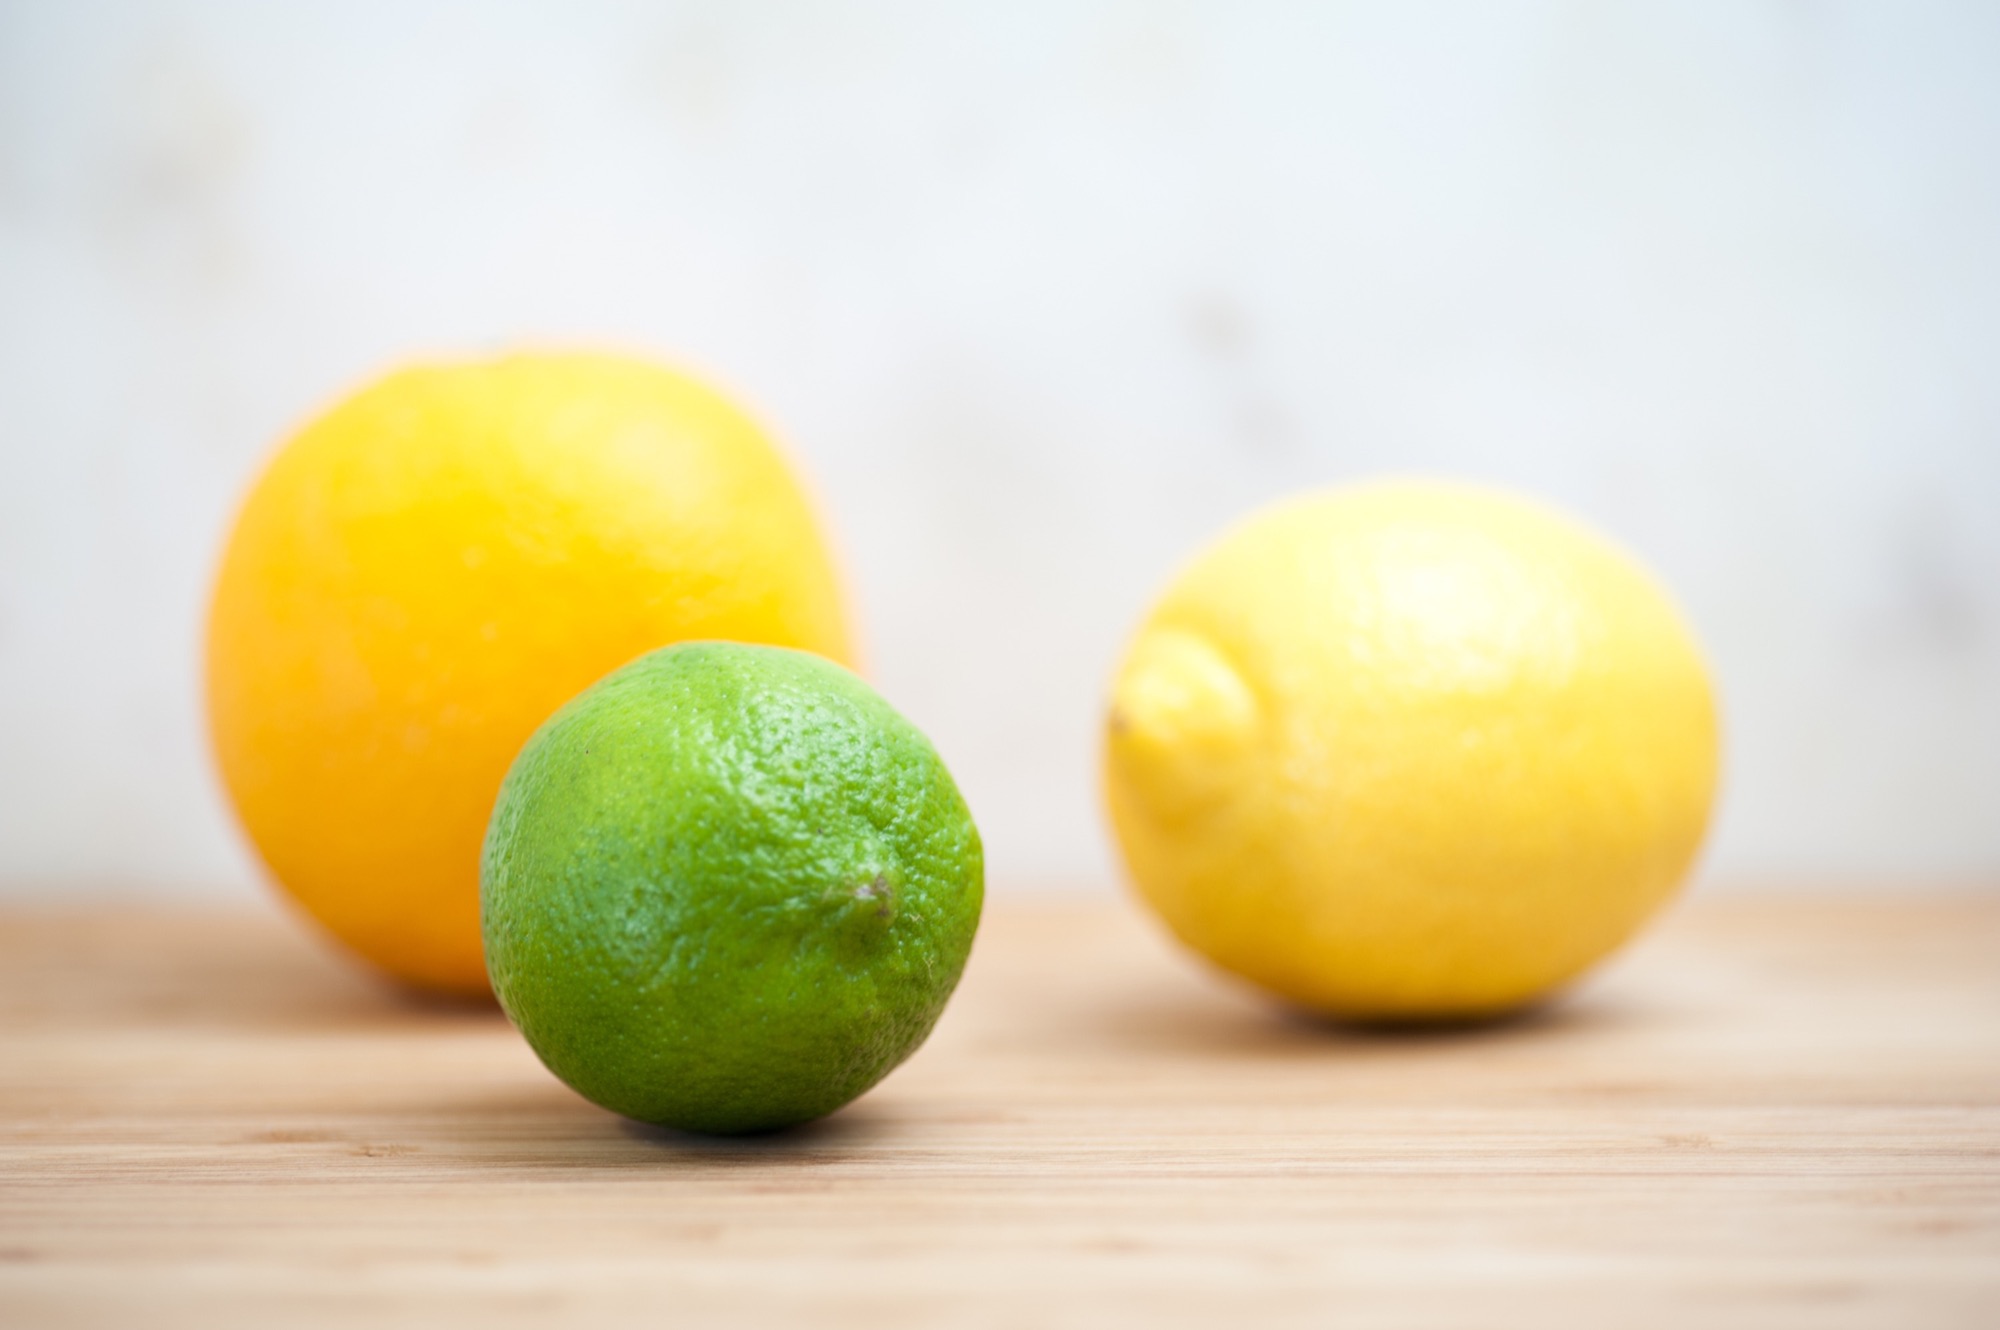 Keurmeestermodule P14: citrusfruit o.a. sinaasappel, mandarijn, citroen en grapefruit,